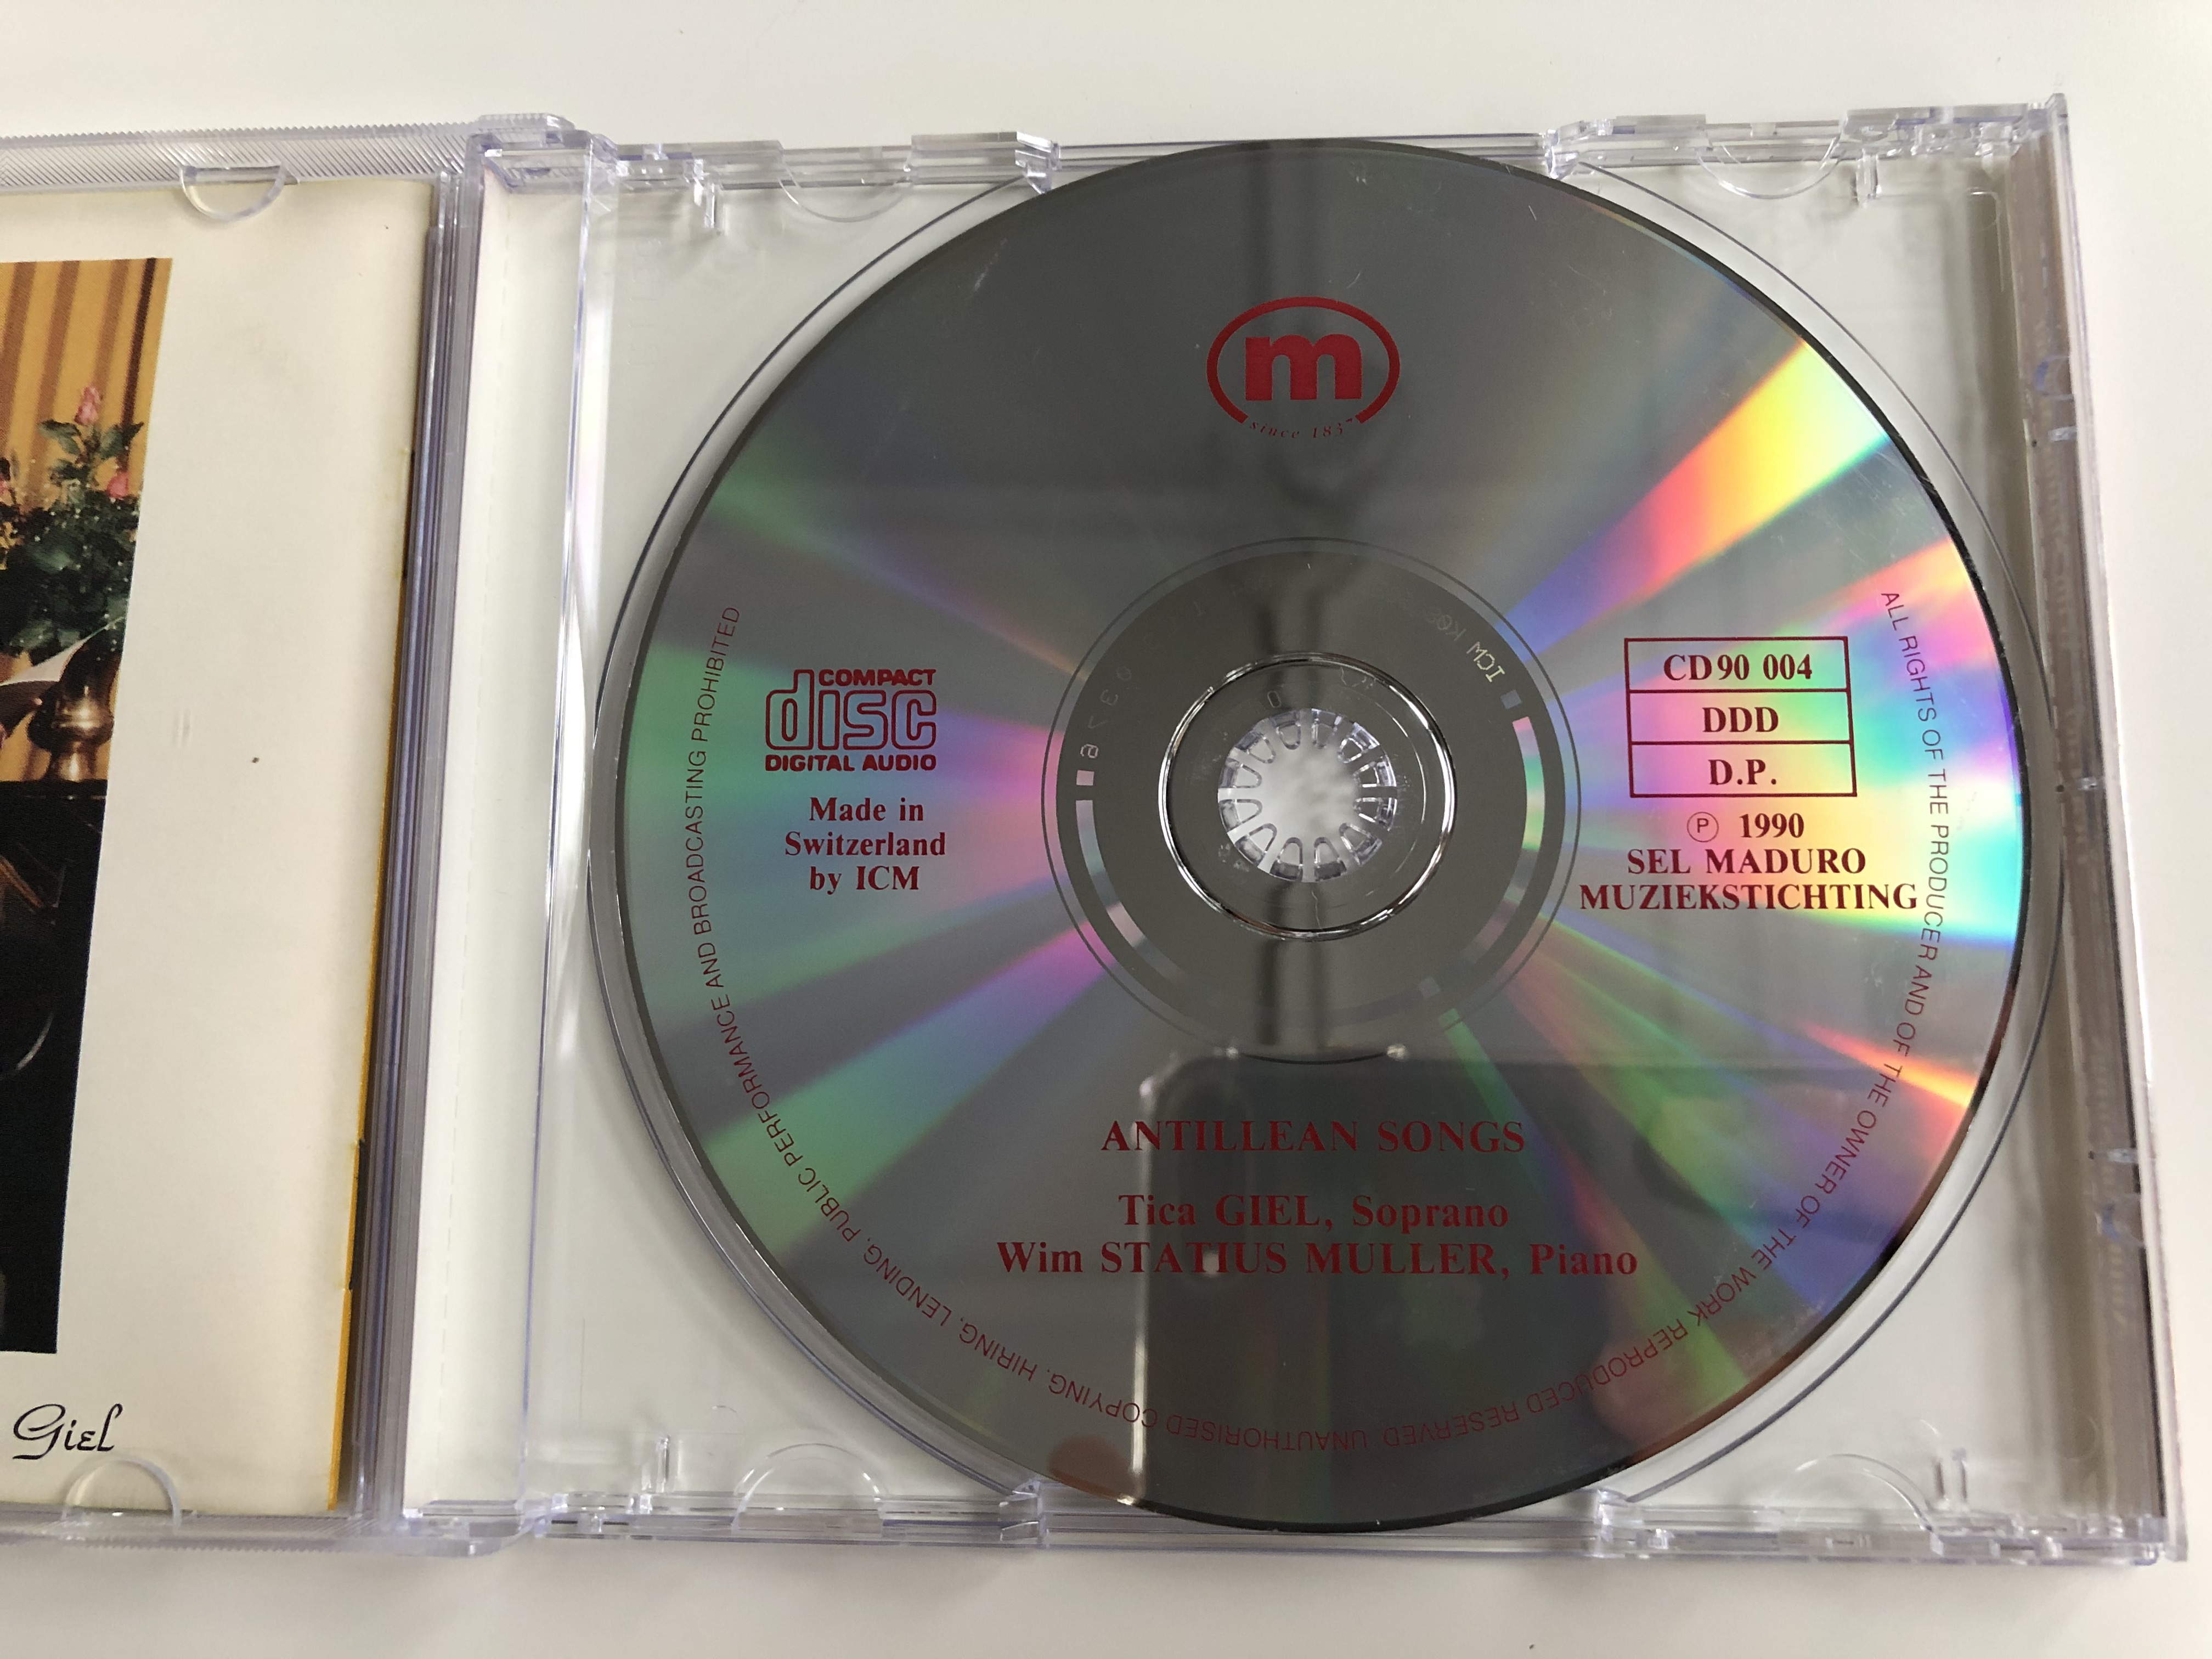 antillean-songs-tica-giel-soprano-wim-statius-muller-piano-m-audio-cd-1990-cd-90-004-9-.jpg